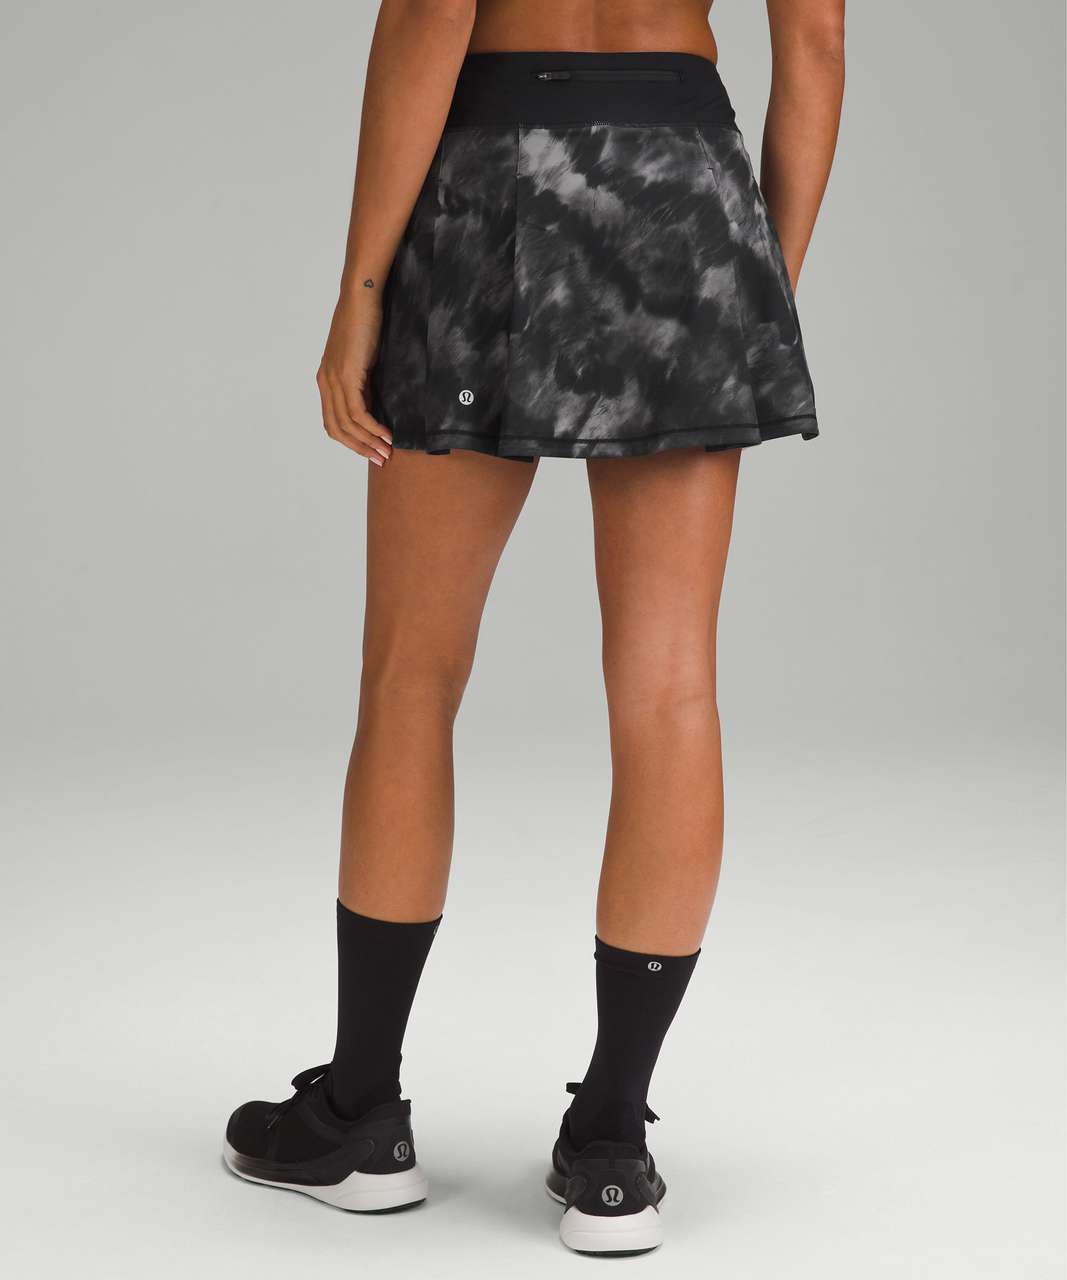 Lululemon Pace Rival Mid-Rise Skirt *Long - Motion Vista Black Multi / Black